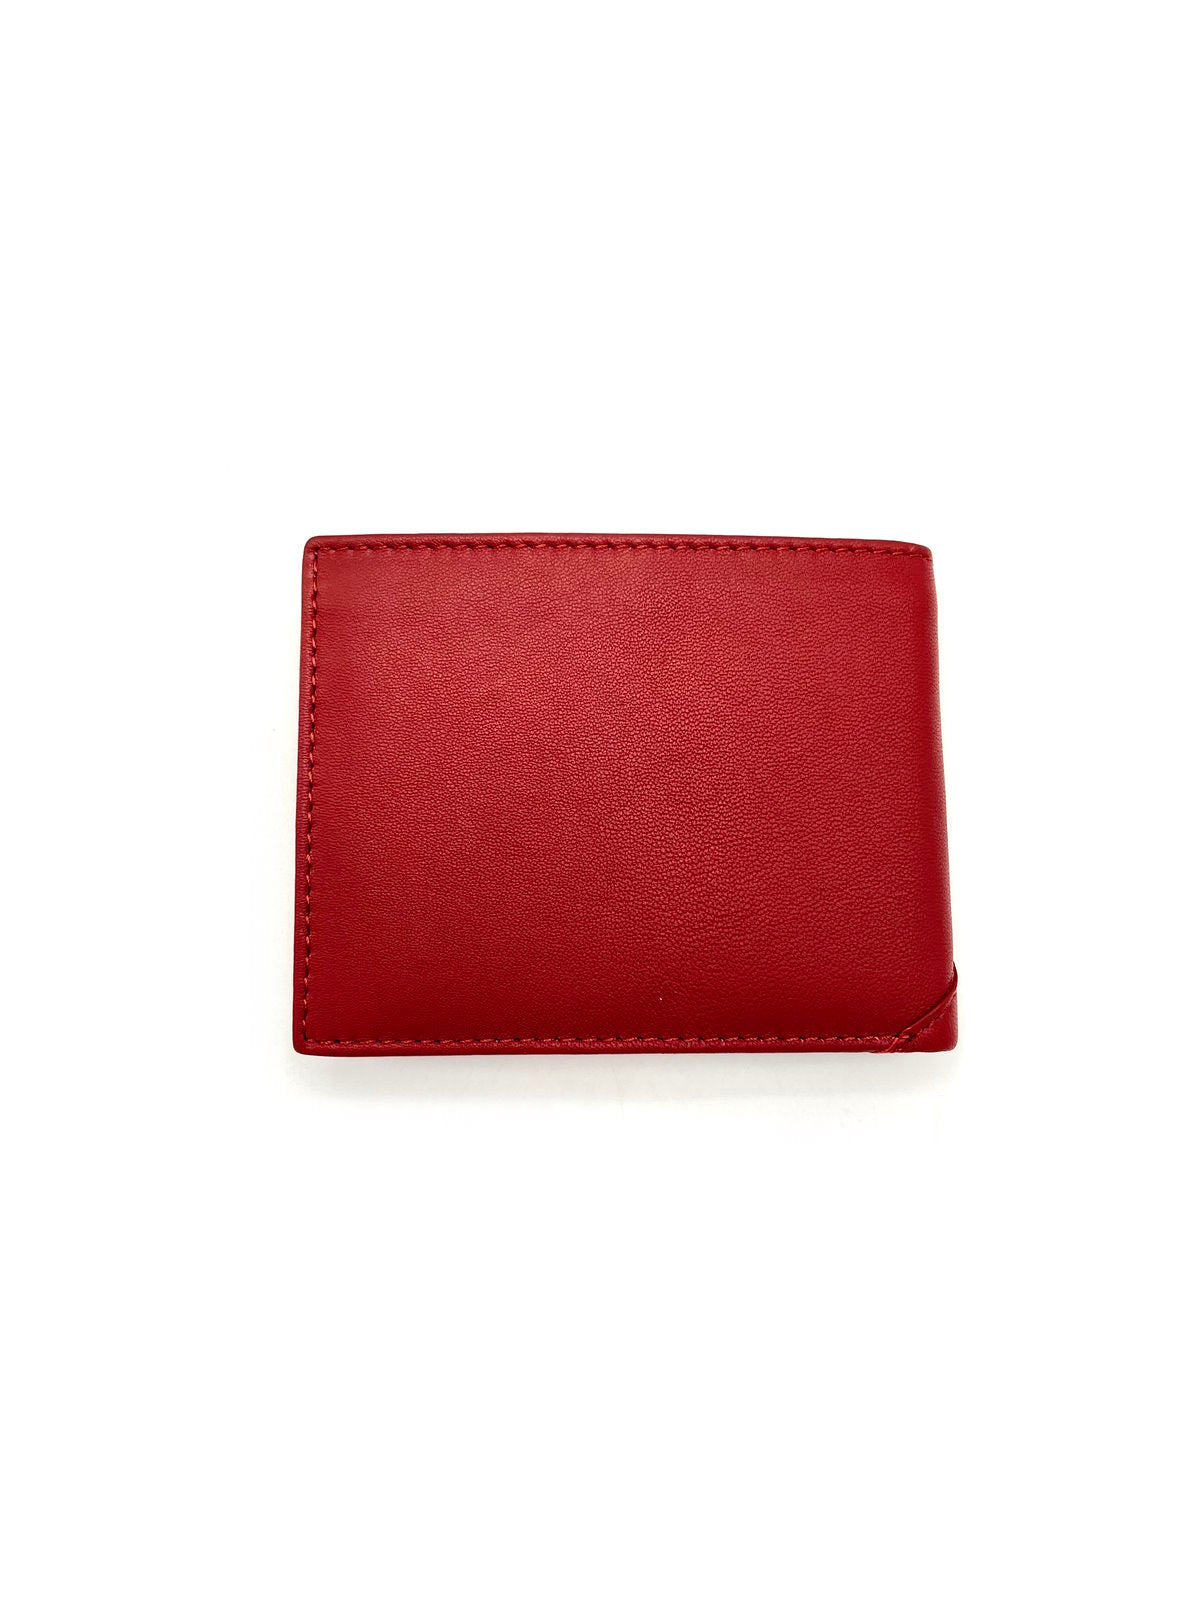 Brand Wampum, Genuine leather wallet, for men, art. PDK263-1.425